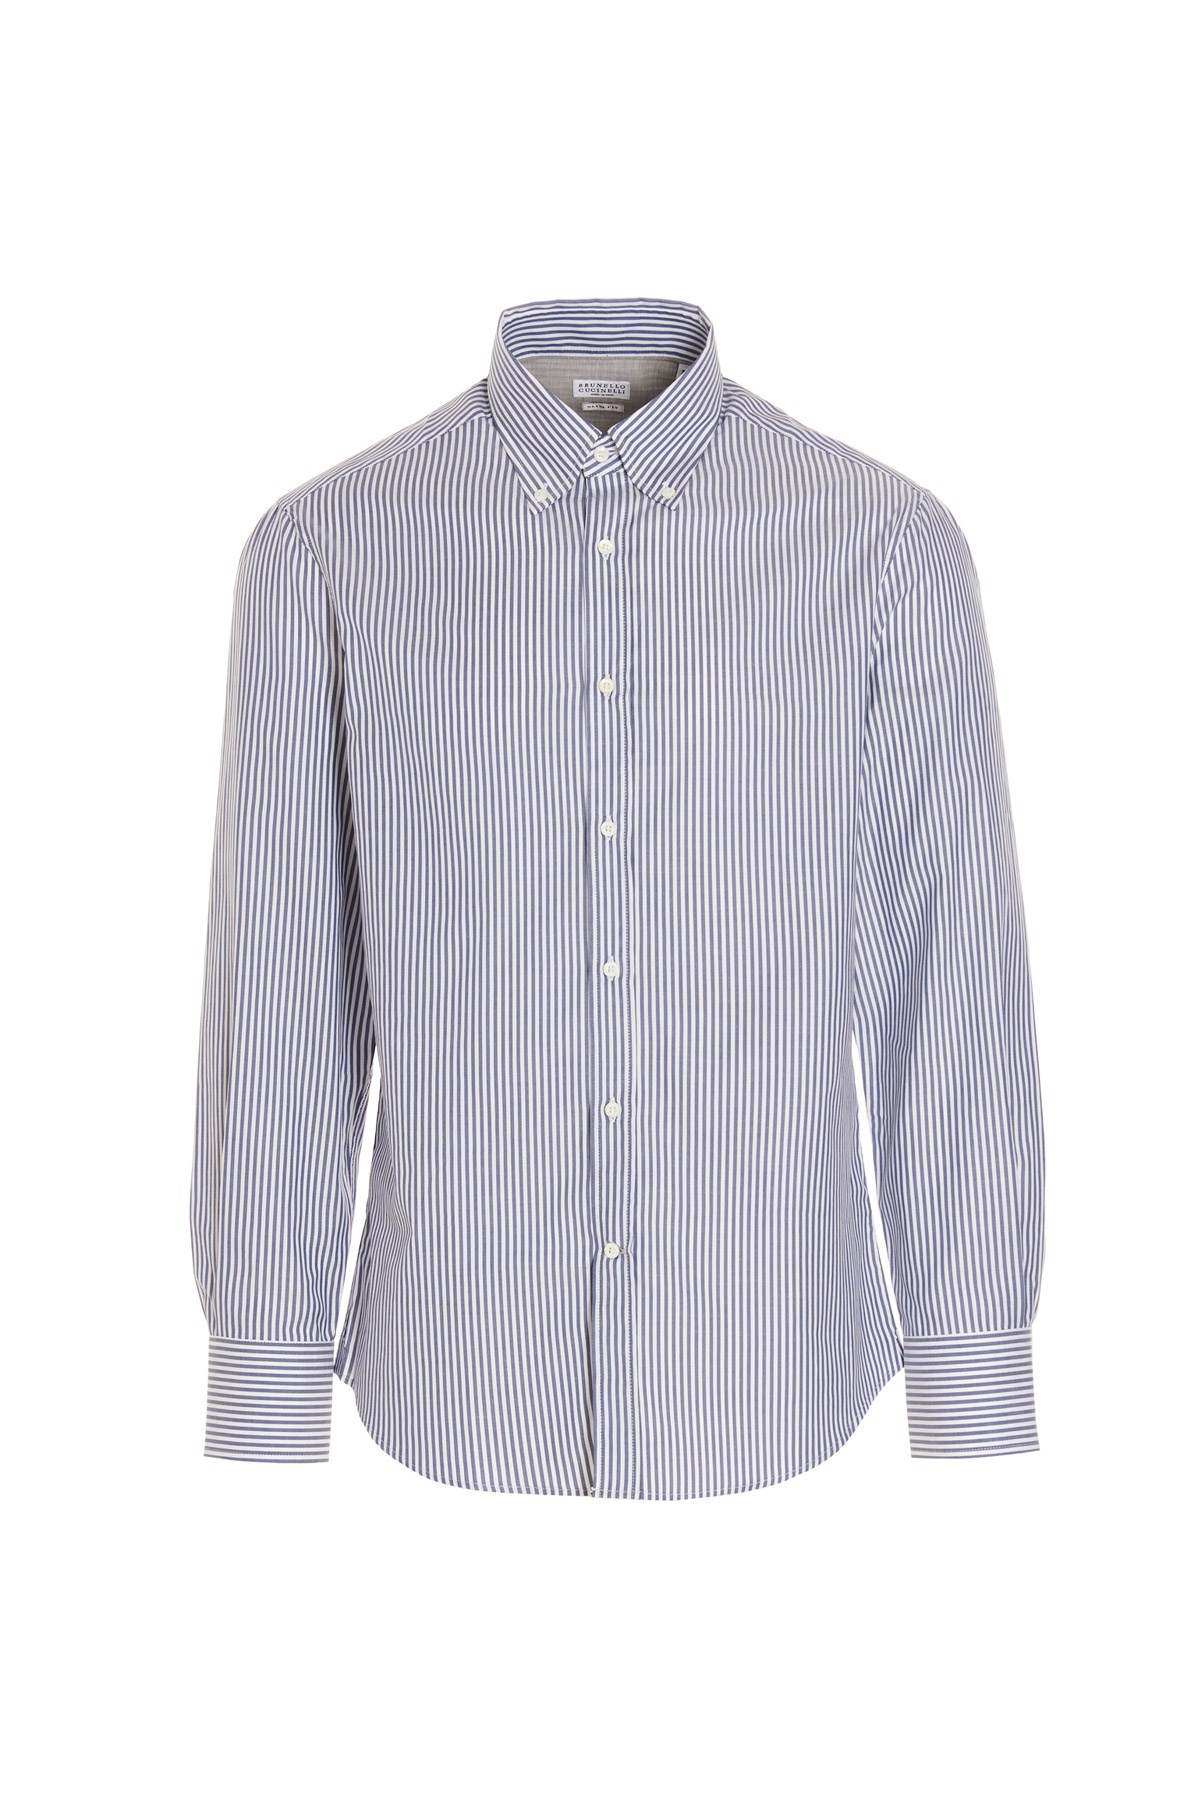 BRUNELLO CUCINELLI Striped Cotton Shirt